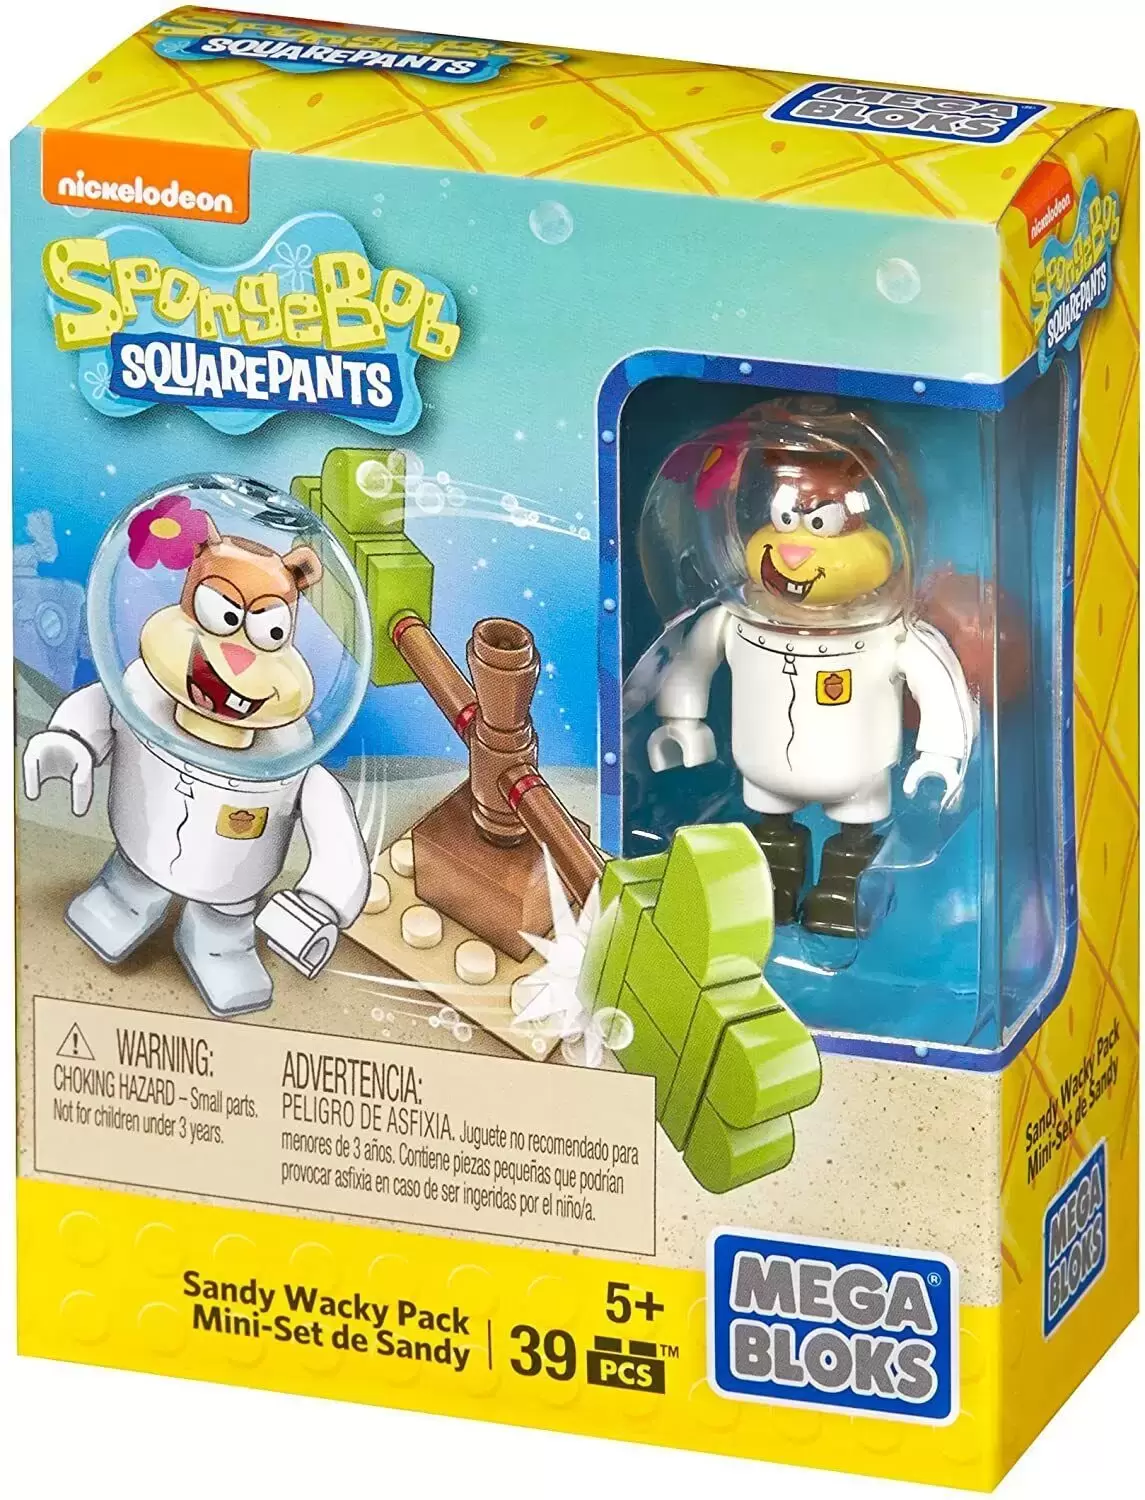 MEGA BLOKS - Spongebob Squarepants - Sandy Wacky Pack